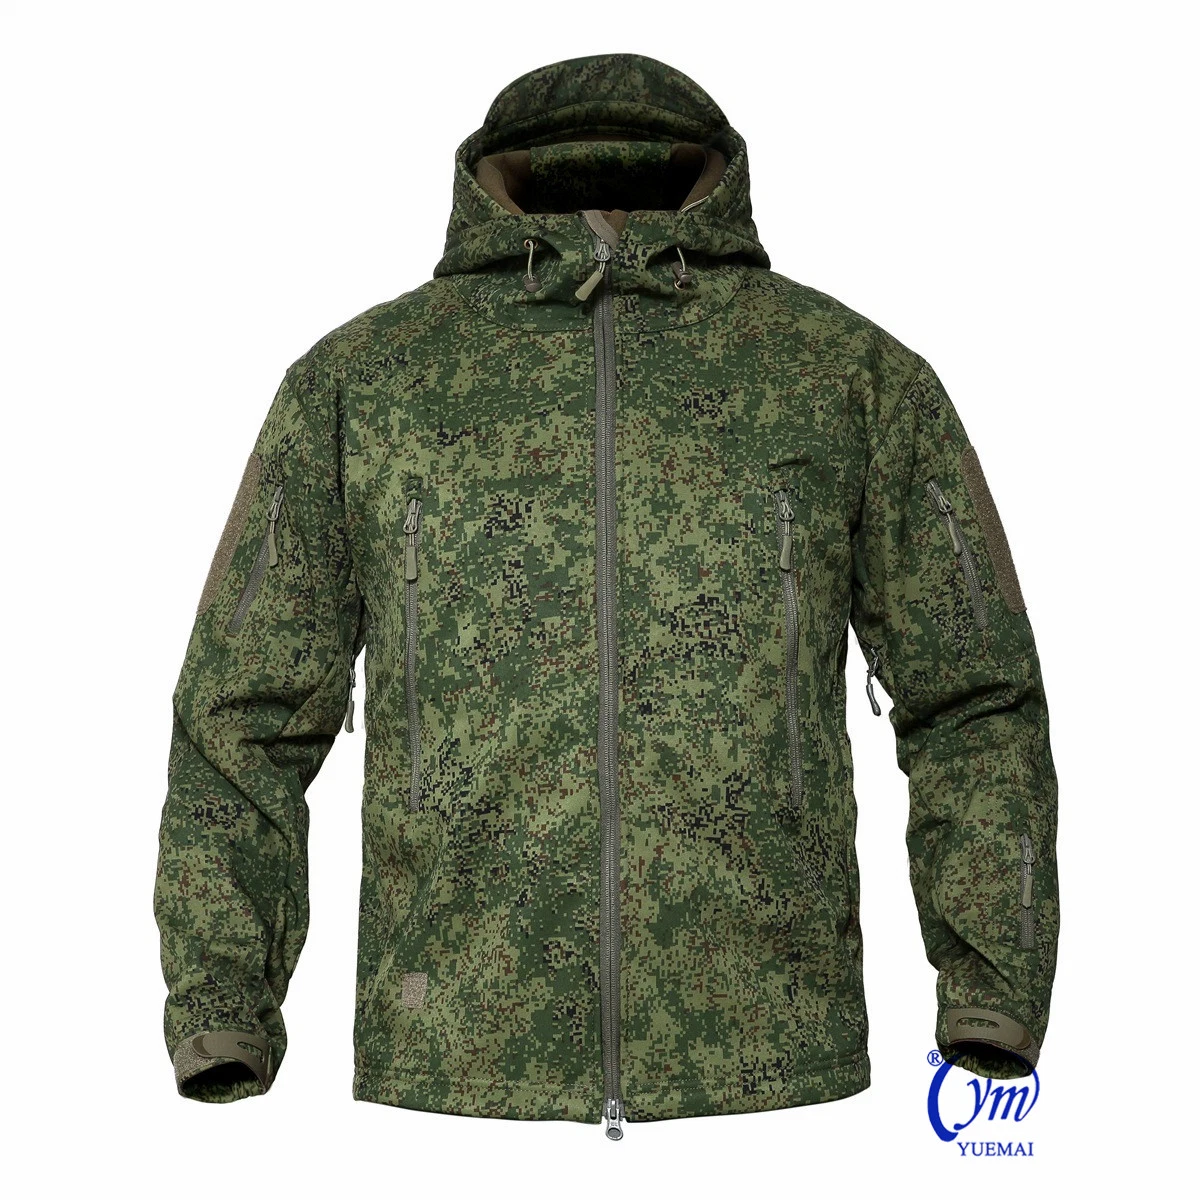 Abrigo táctico militar impermeable de Rusia, camuflaje, chaqueta de caza suave al aire libre del ejército.